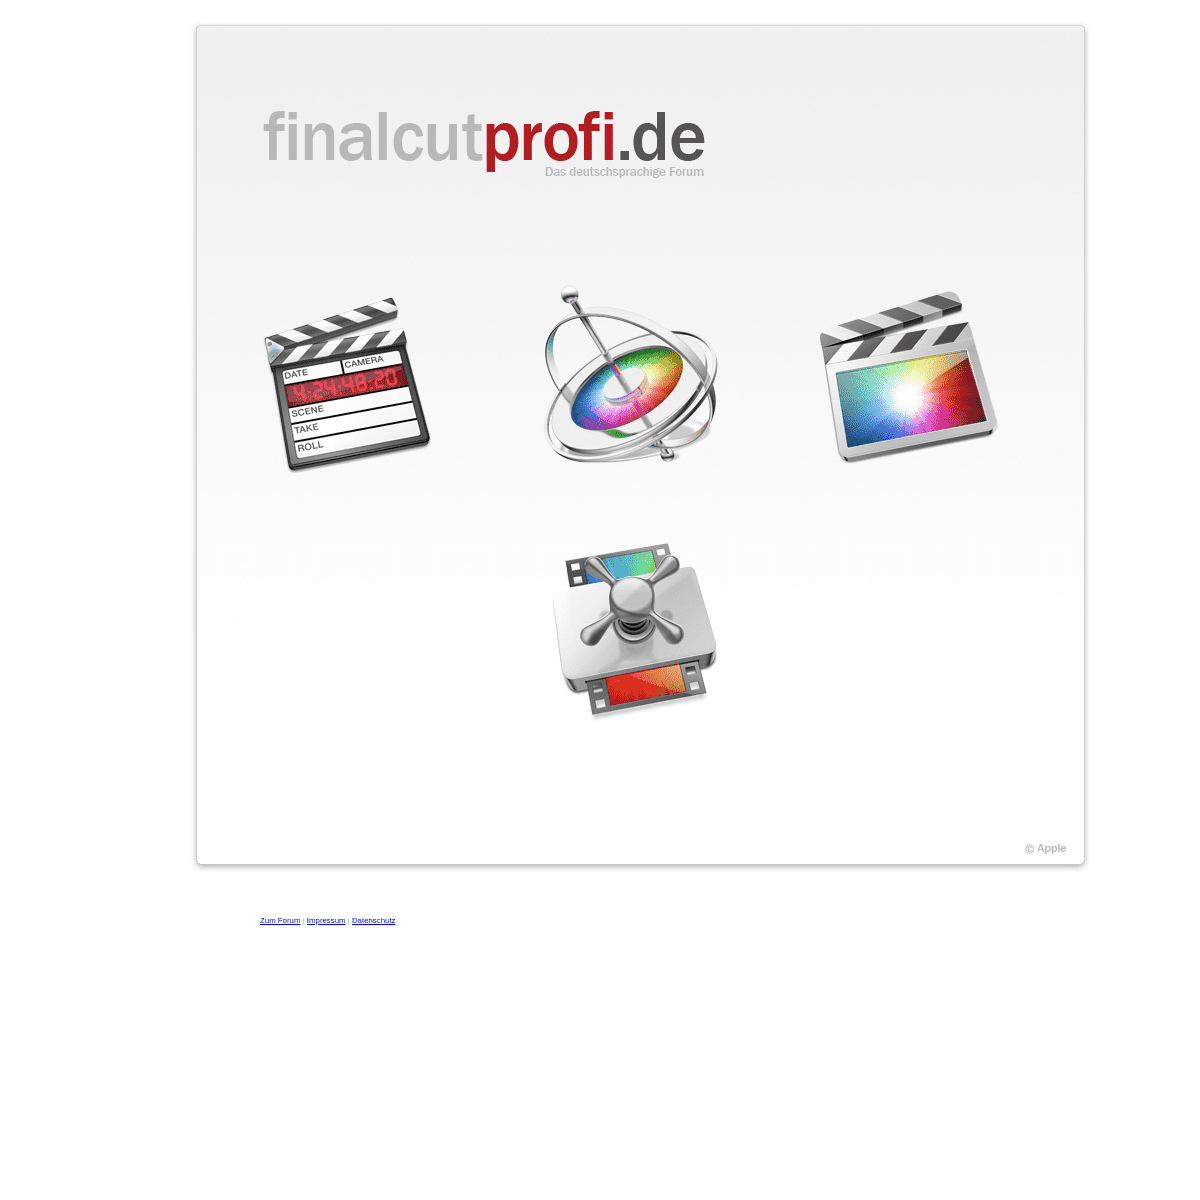 A complete backup of finalcutprofi.de